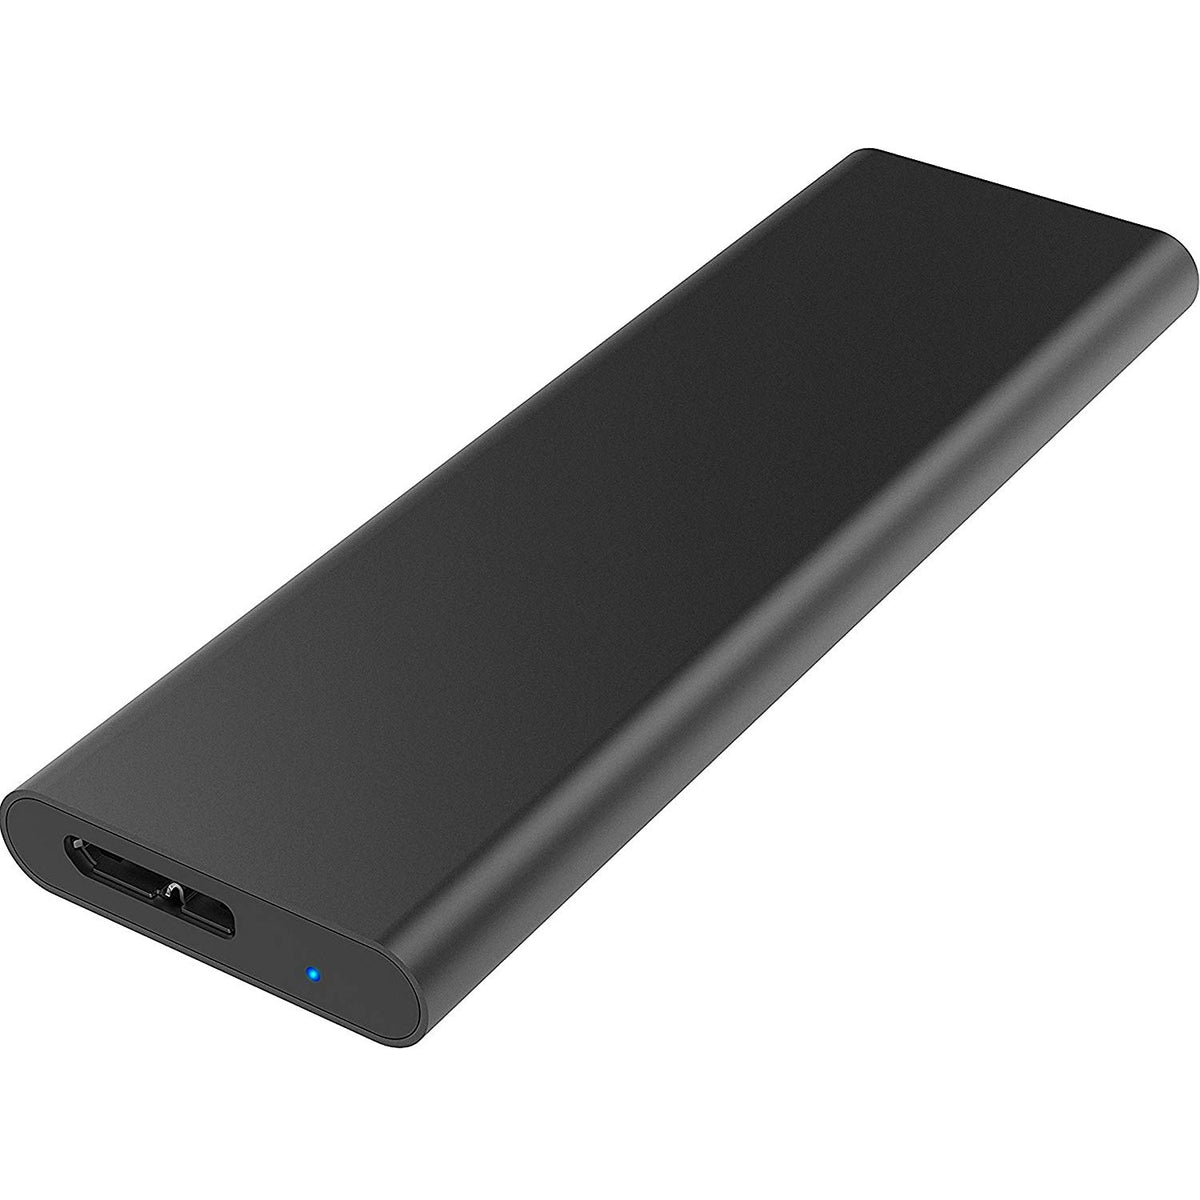 M.2 SSD [NGFF] to USB 3.0 Aluminum Enclosure